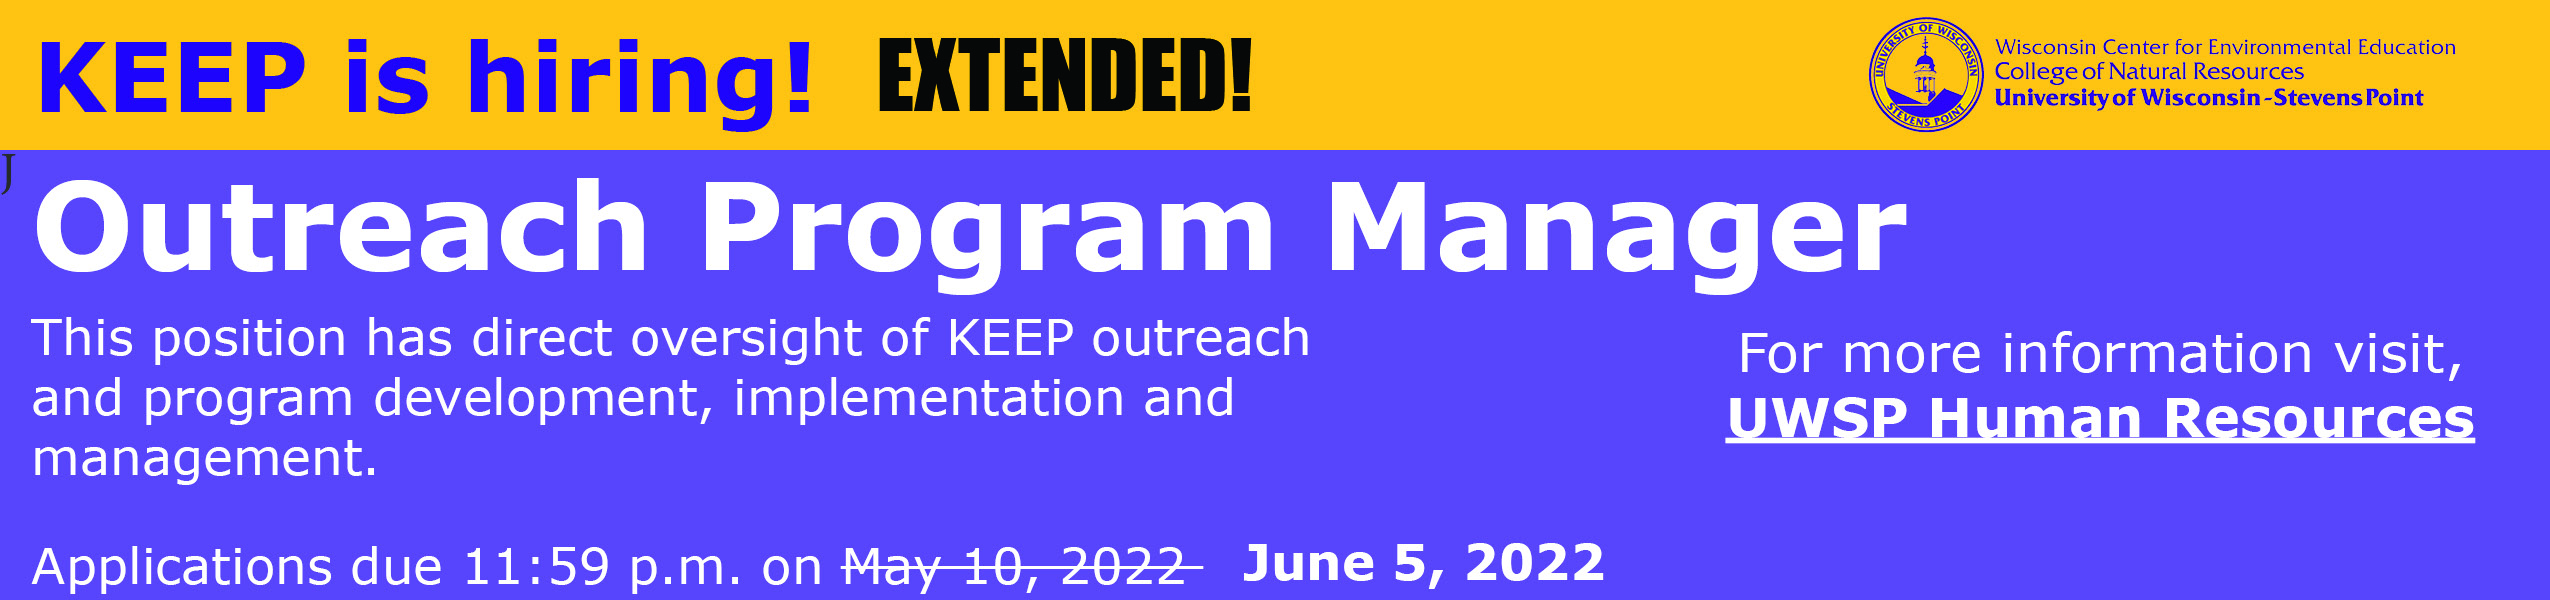 KEEP Outreach Program Manager Extended_ June 5.jpg